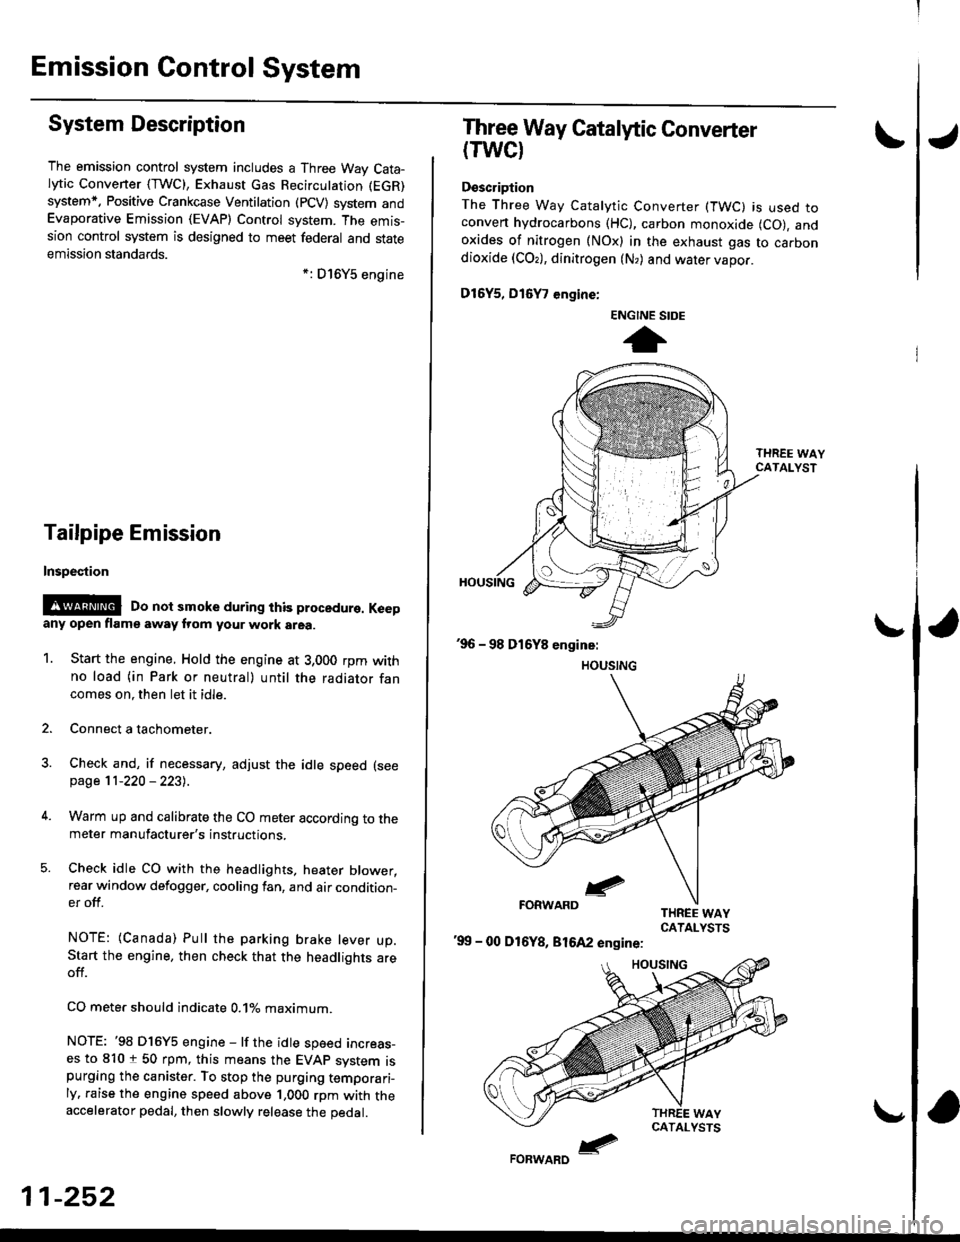 HONDA CIVIC 1996 6.G Workshop Manual Emission Gontrol System
System Description
The emission control system includes a Three Way Cata-lytic Convener (TWC), Exhaust Gas Recirculation (EGR)
system,. Positive Crankcase Ventilation (pCV) sys